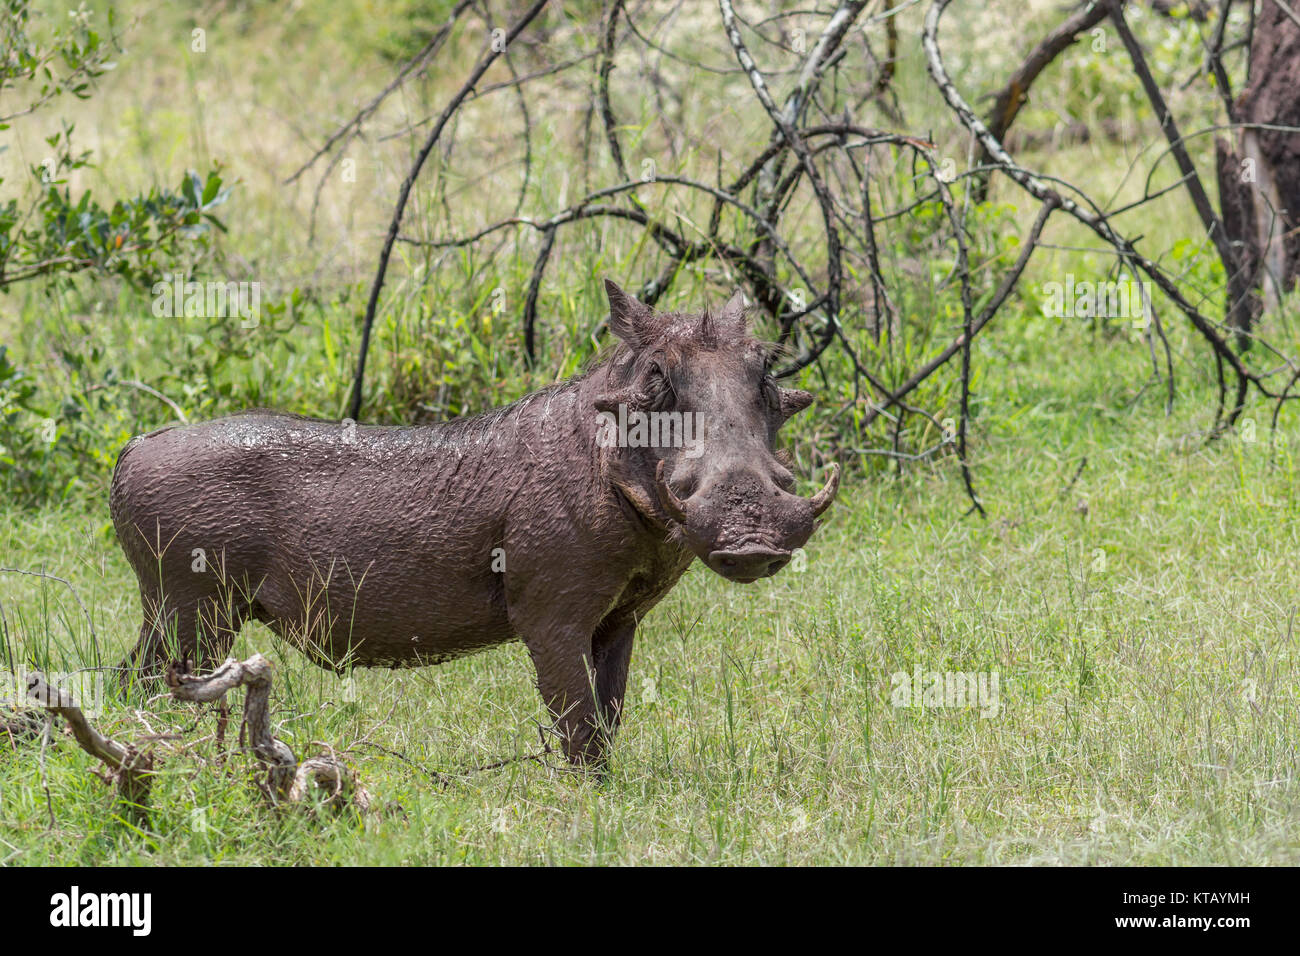 Common warthog (Phacochoerus africanus) Stock Photo